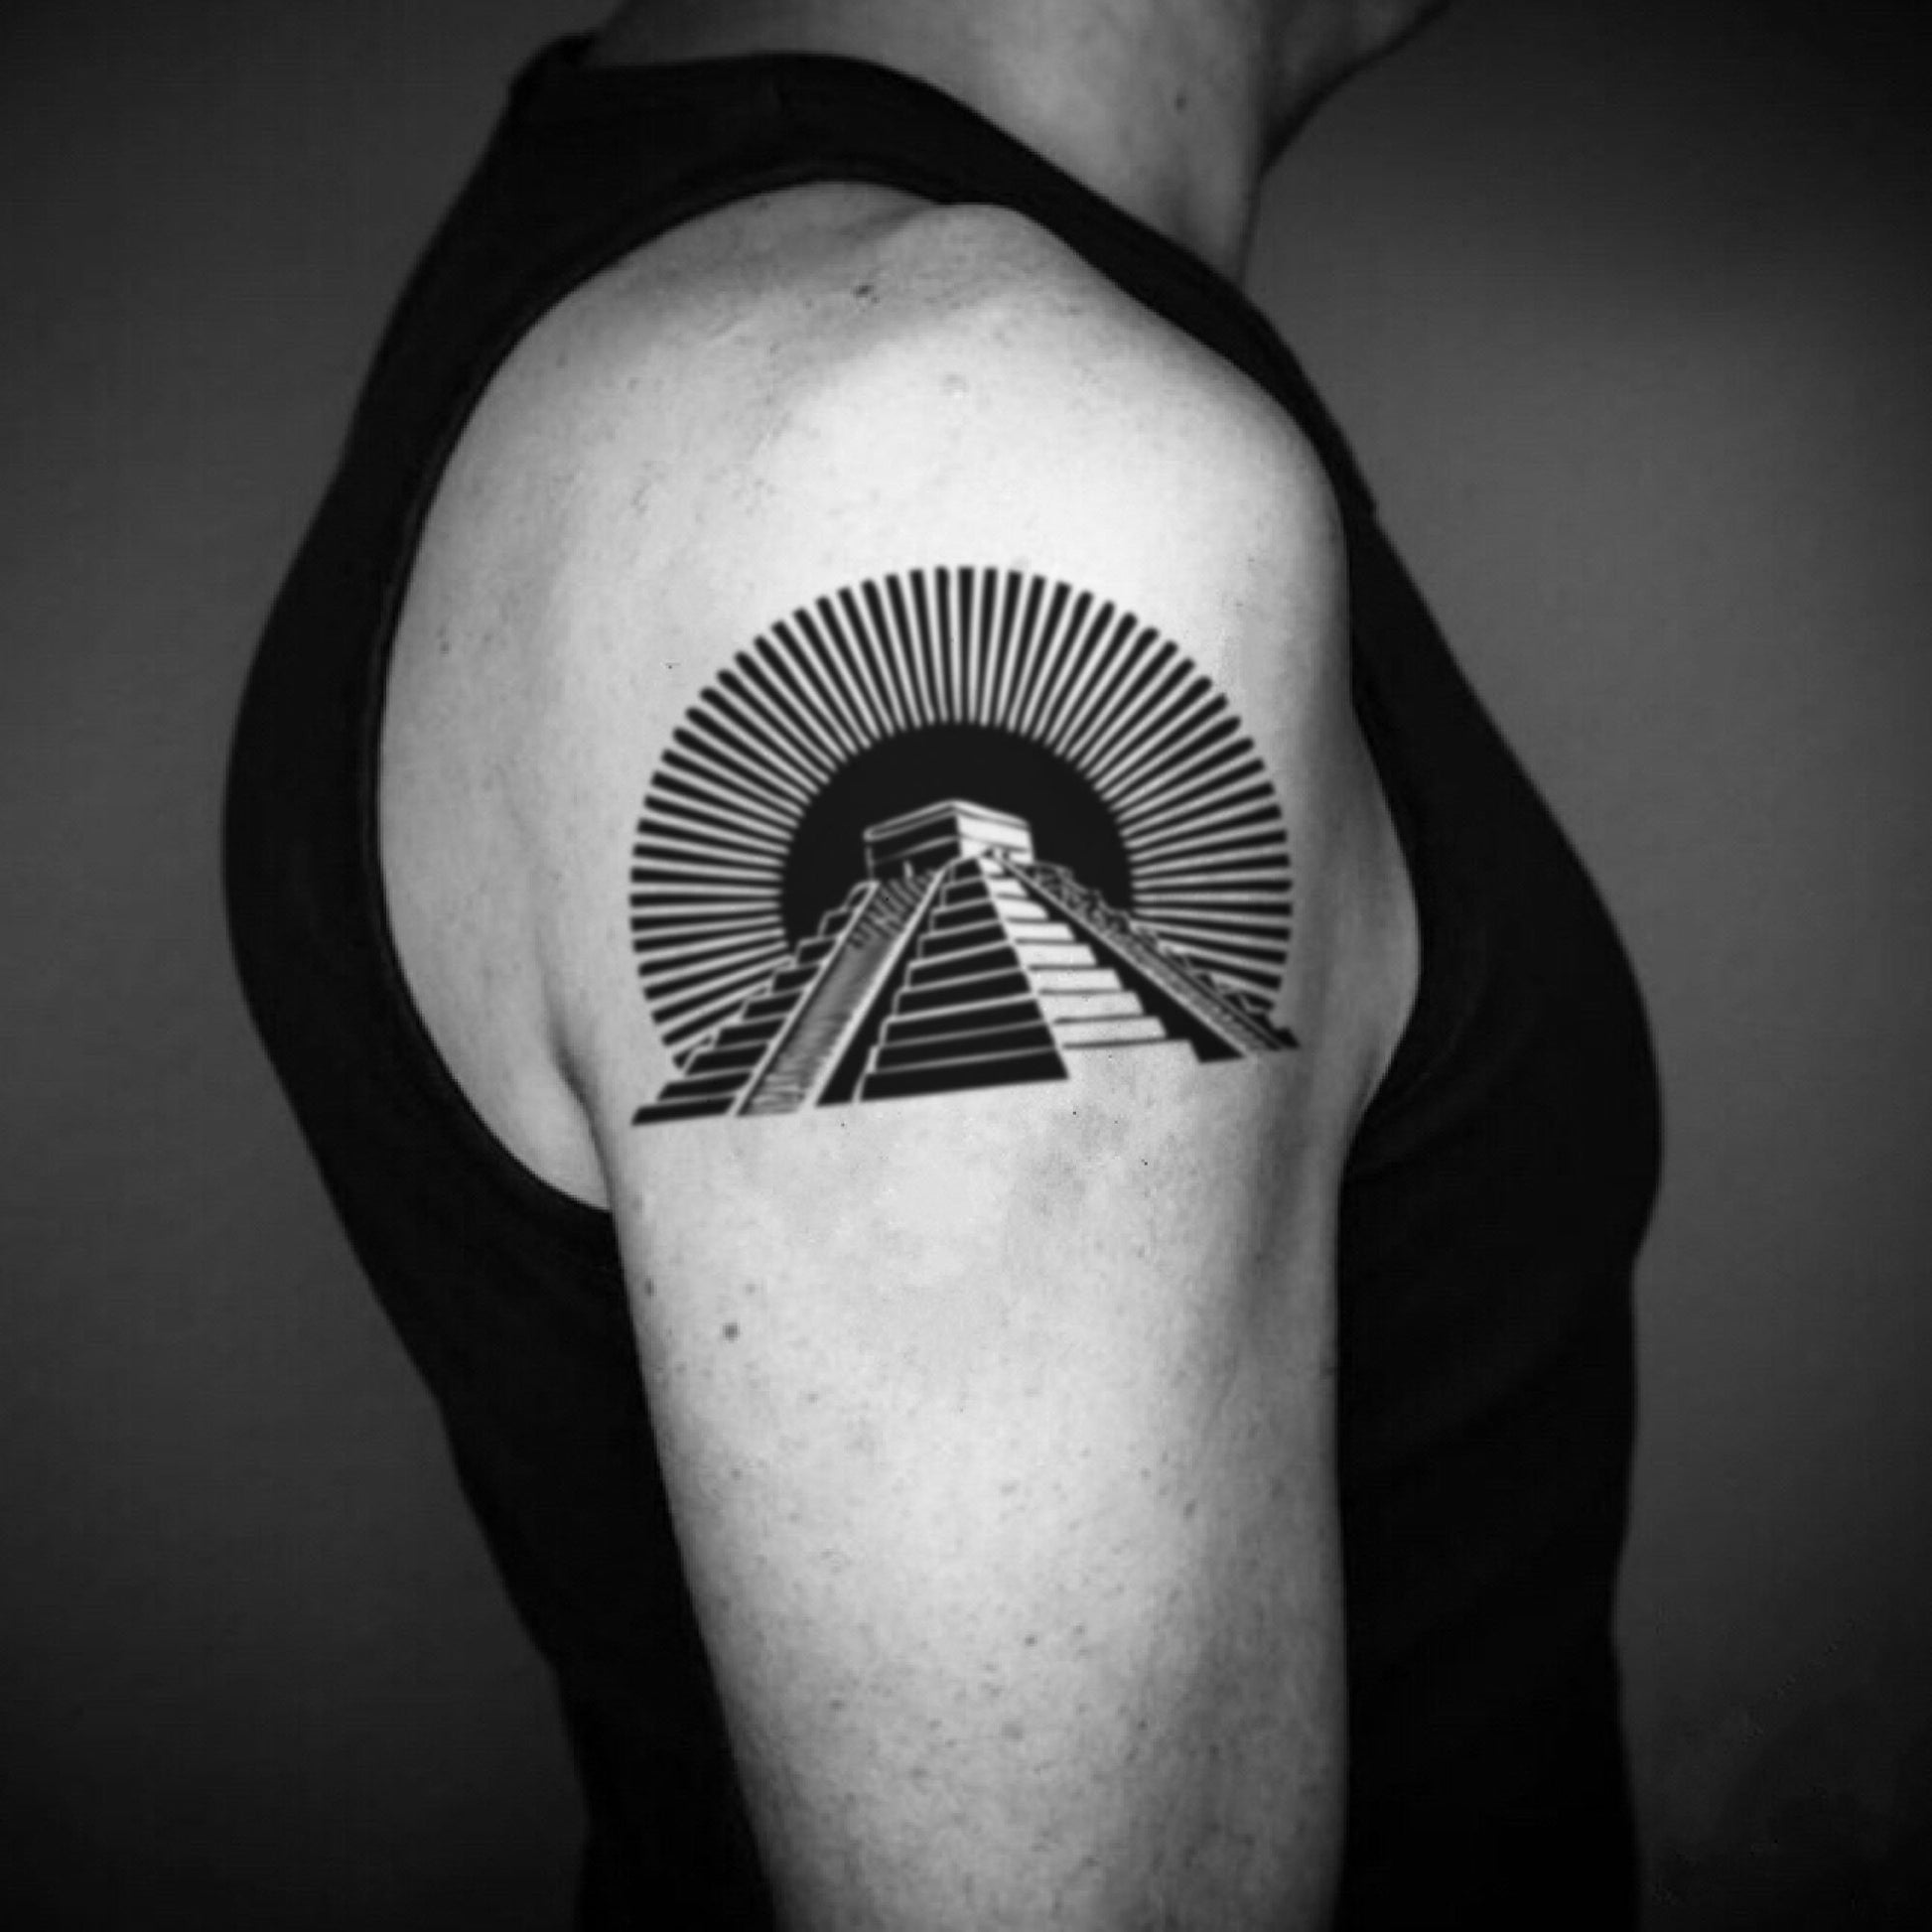 fake big aztec pyramid illustrative temporary tattoo sticker design idea on upper arm